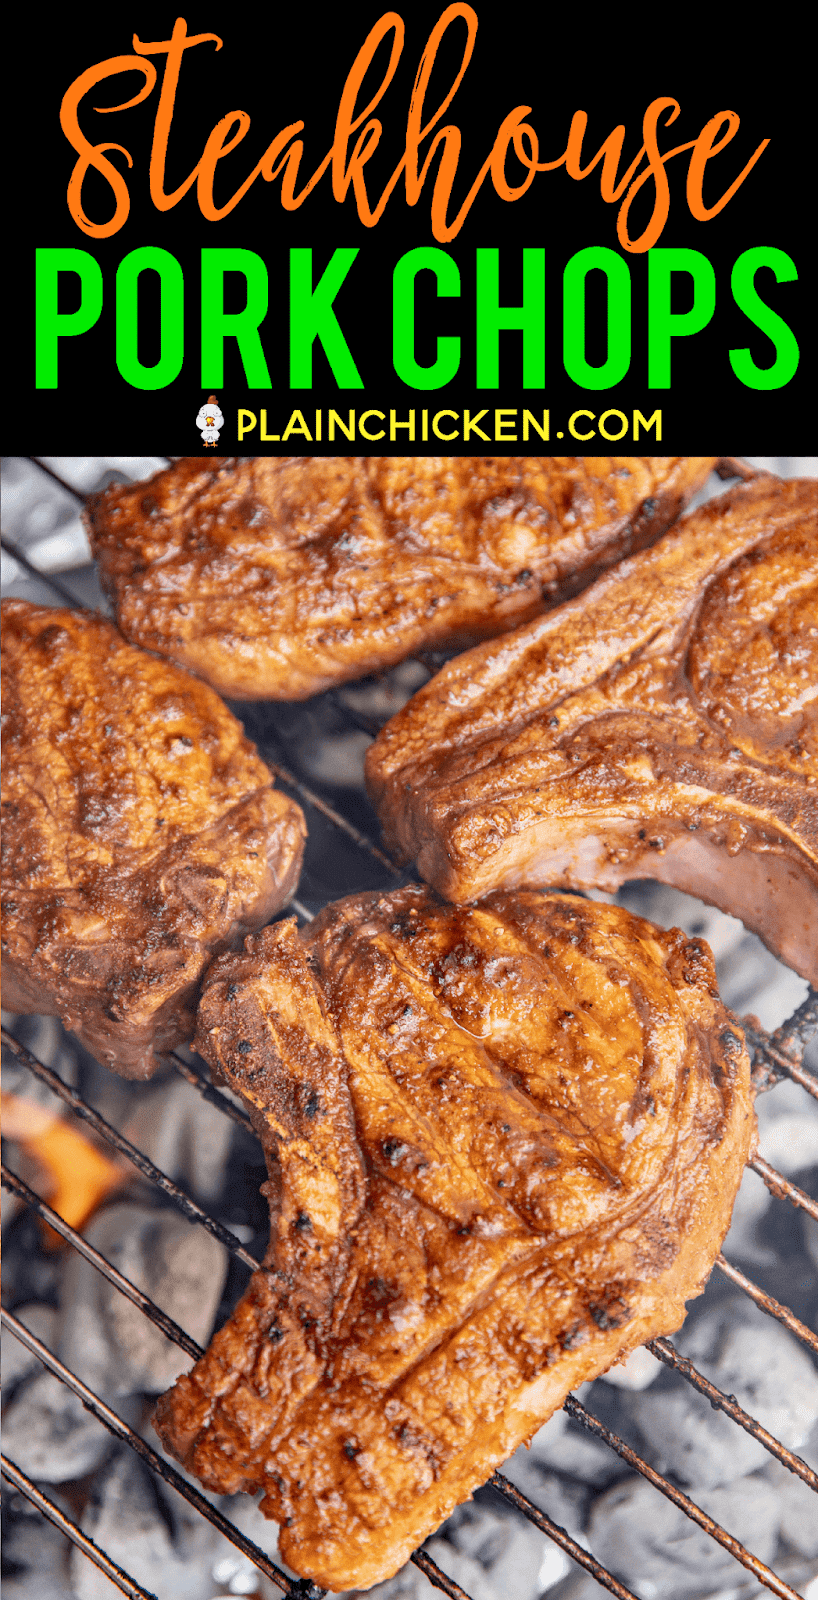 Steakhouse Pork Chops - Plain Chicken